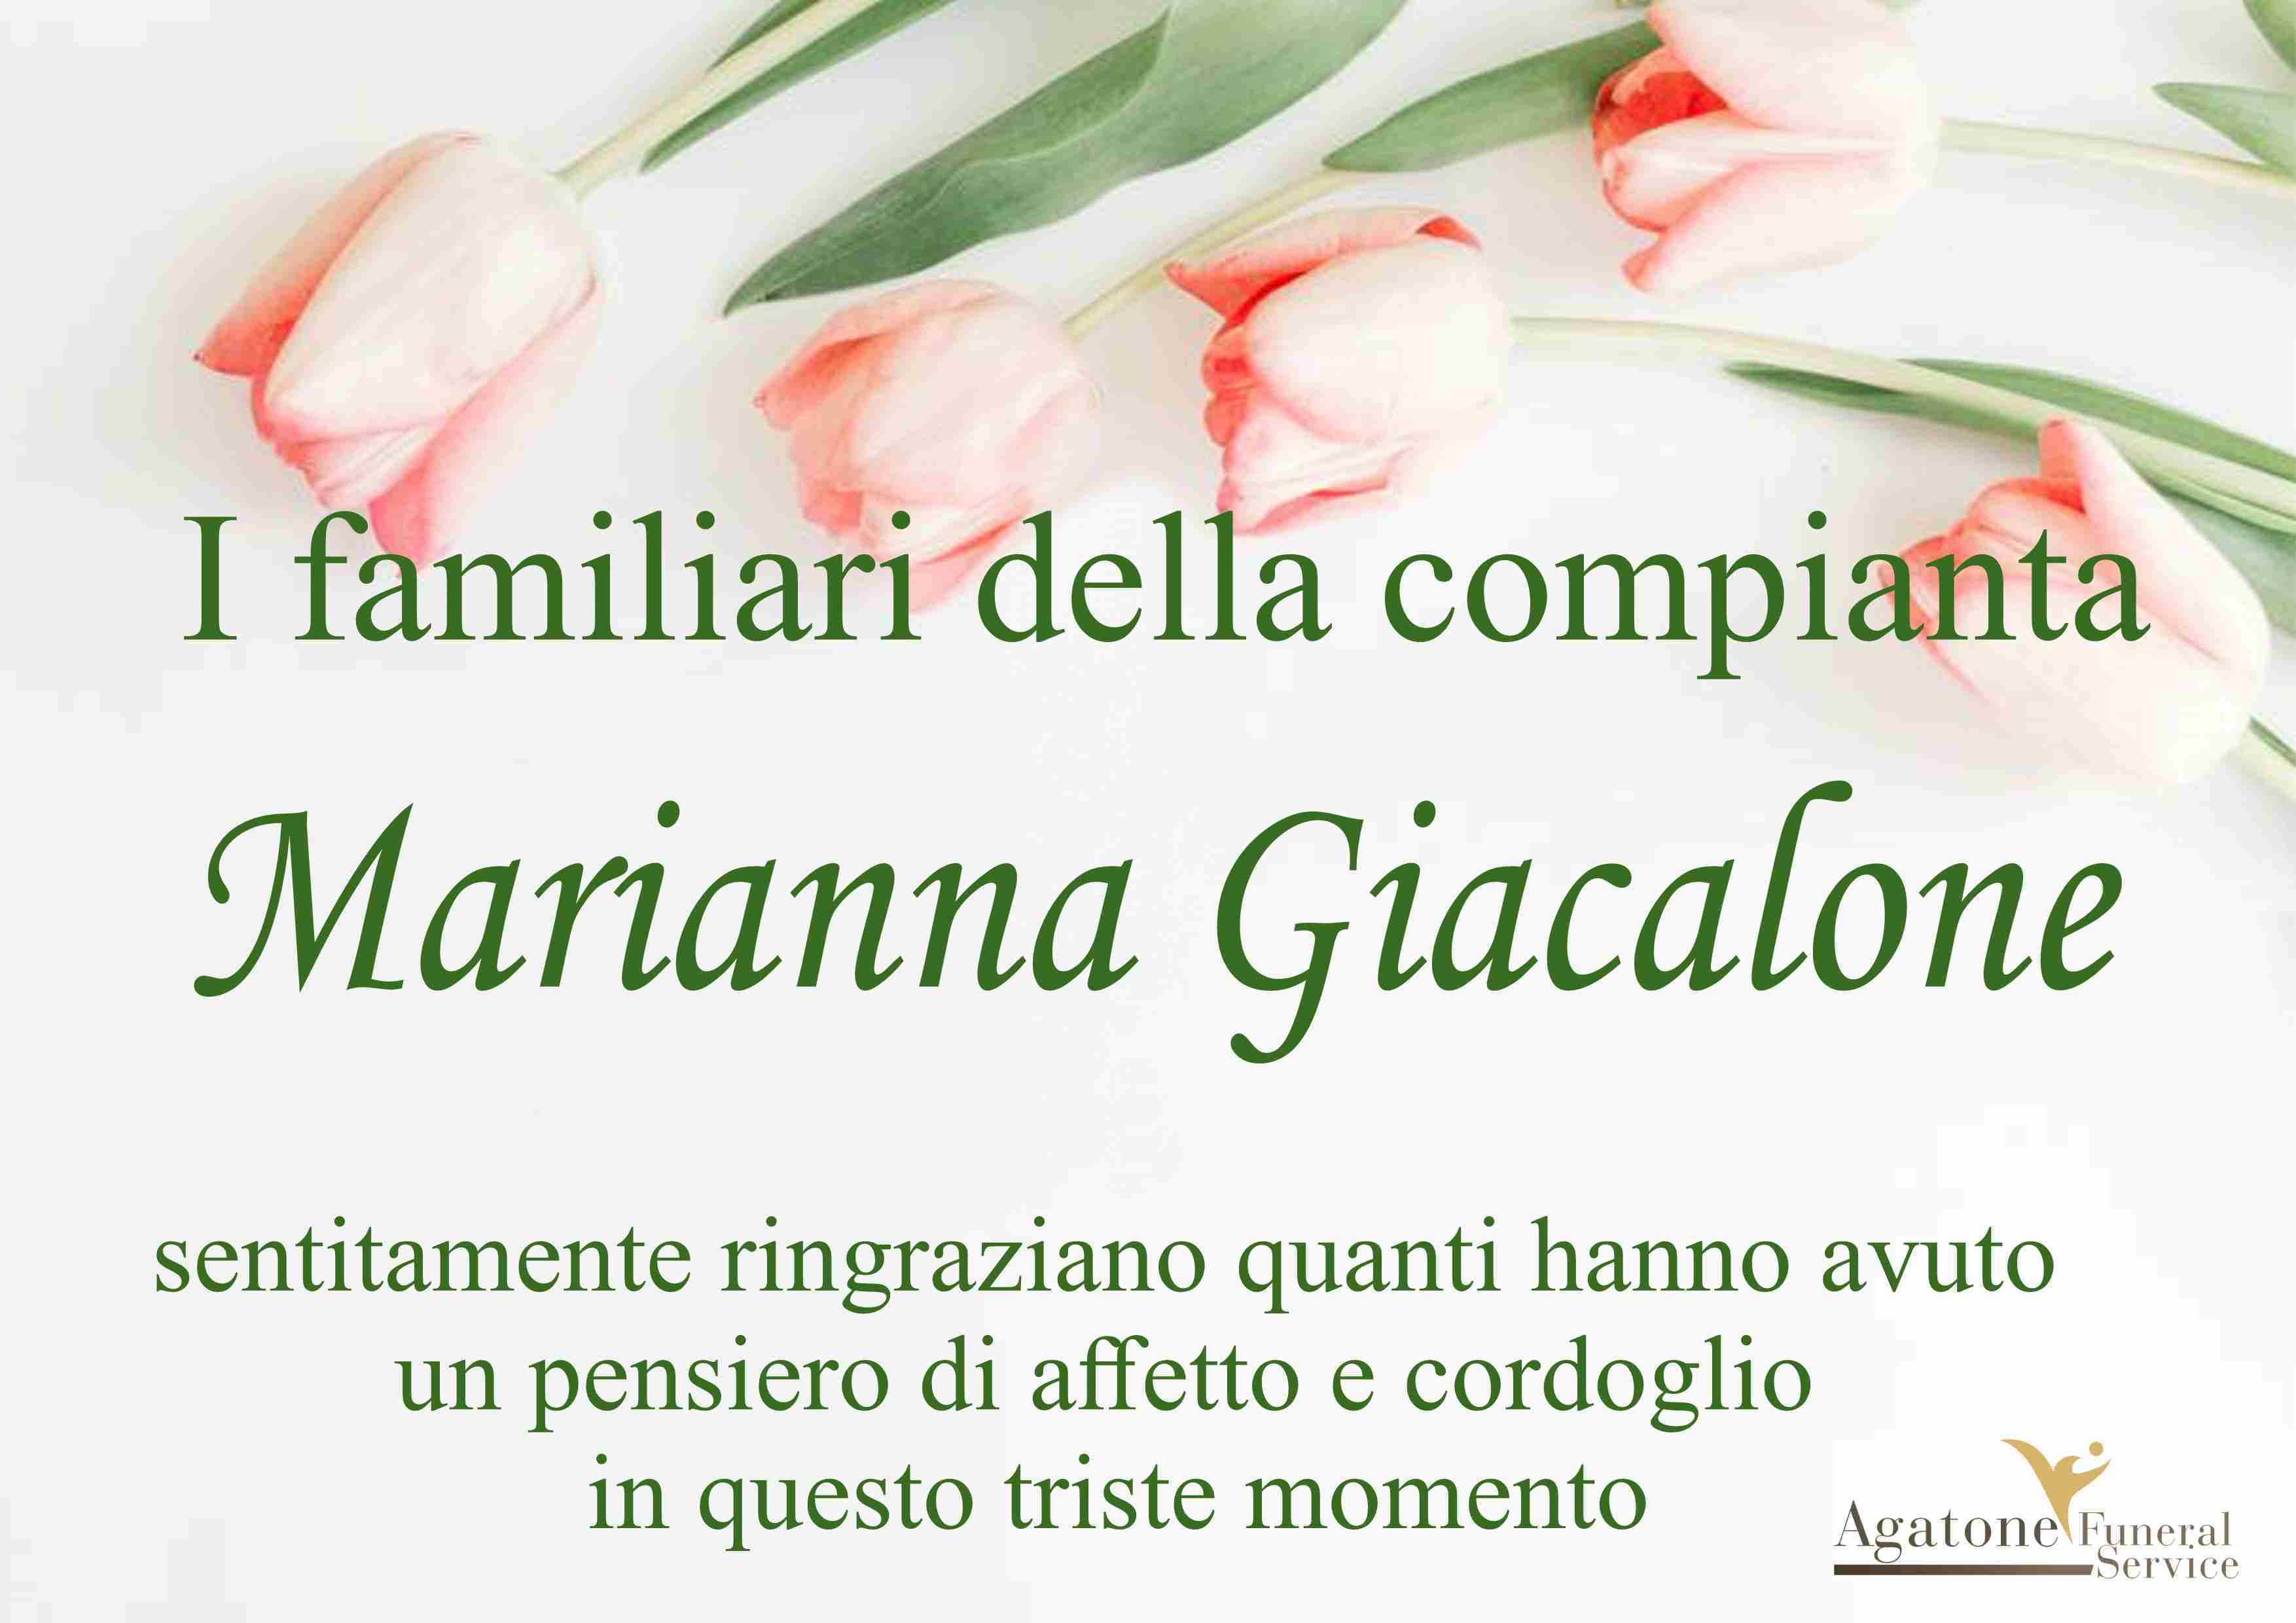 Marianna Giacalone